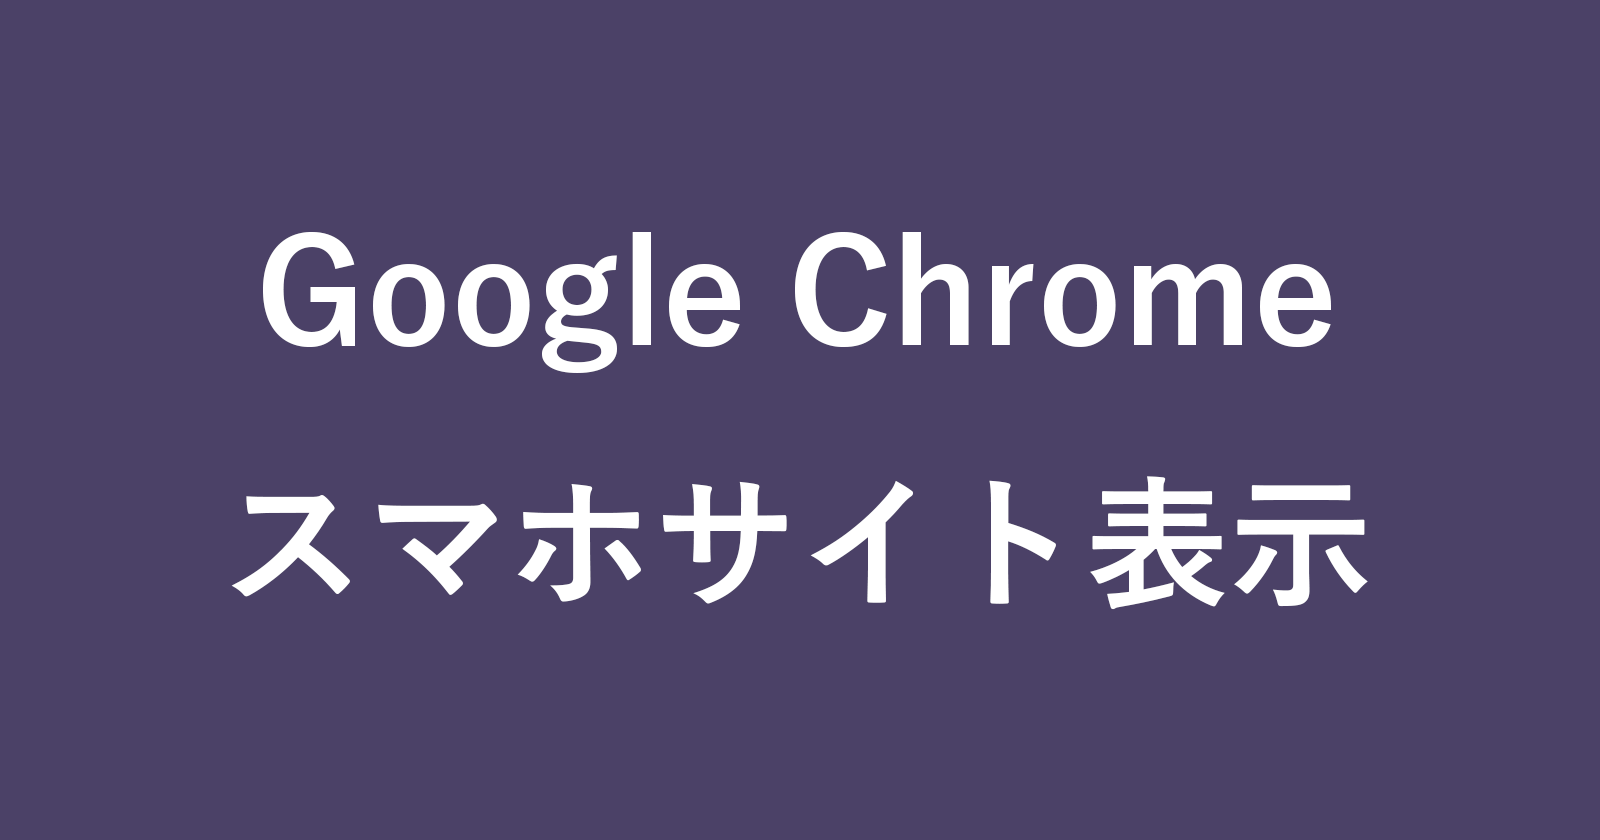 google chrome mobile sites